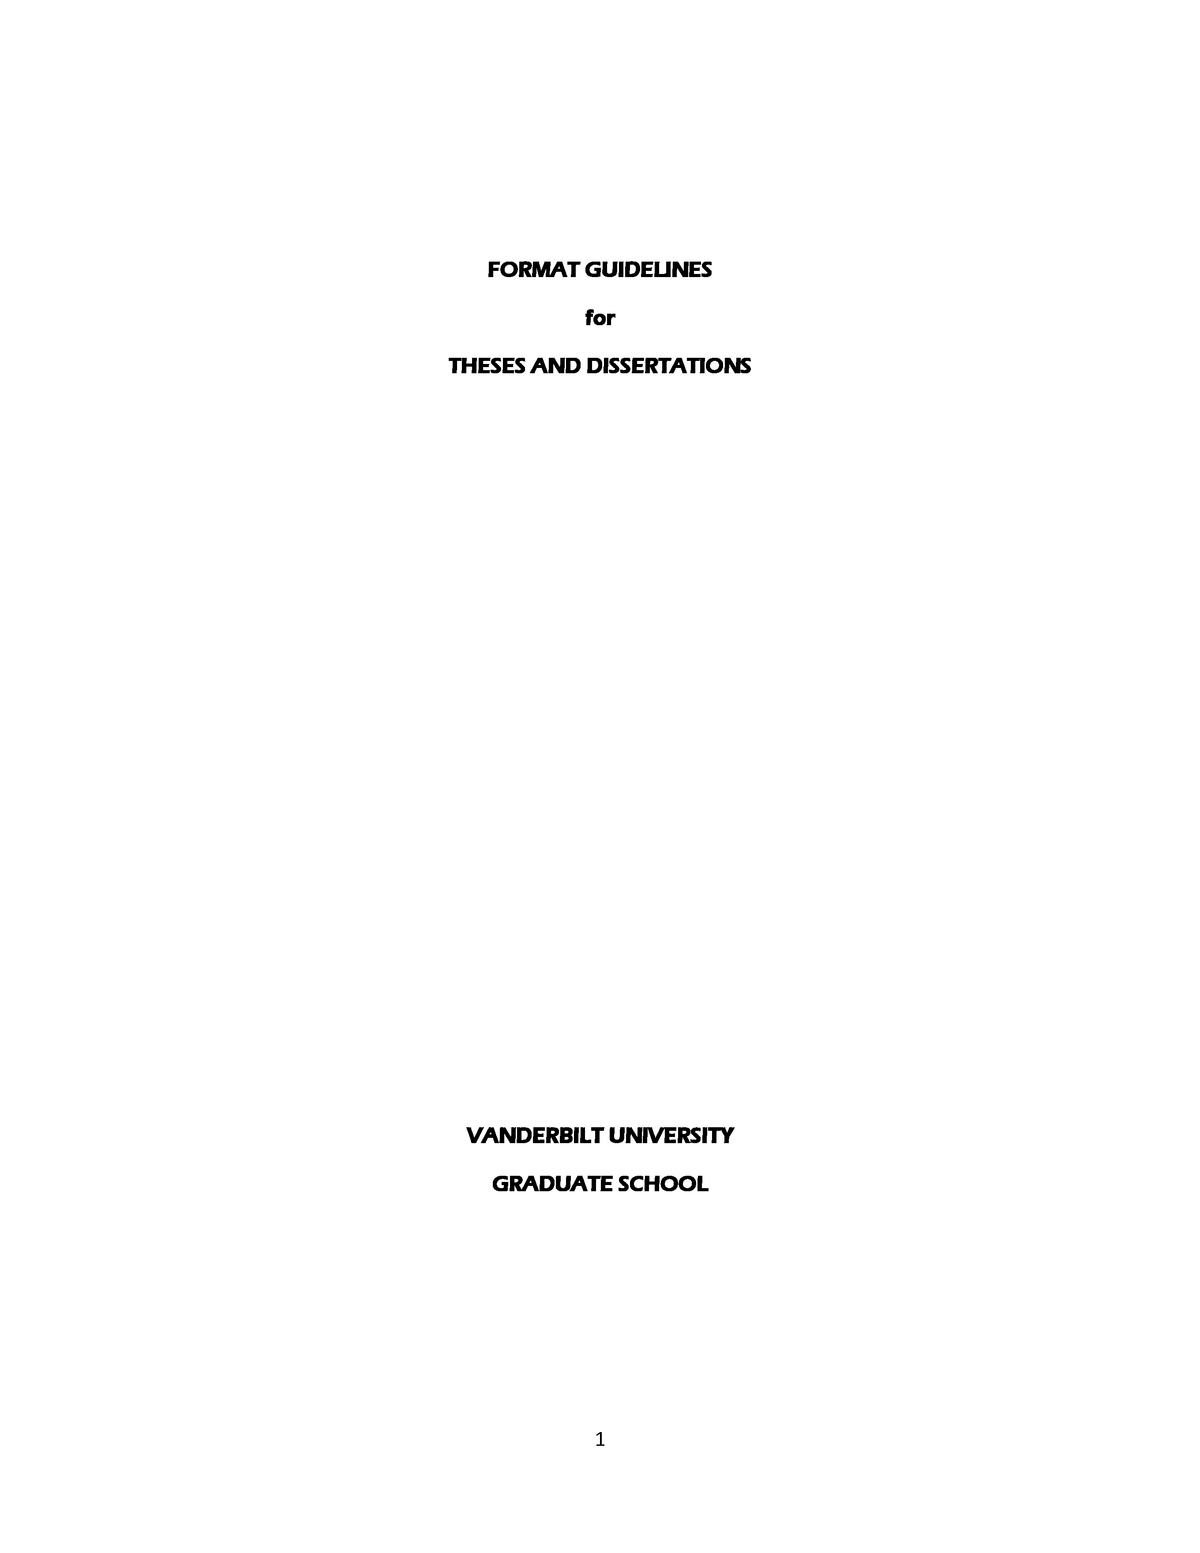 vanderbilt thesis and dissertations